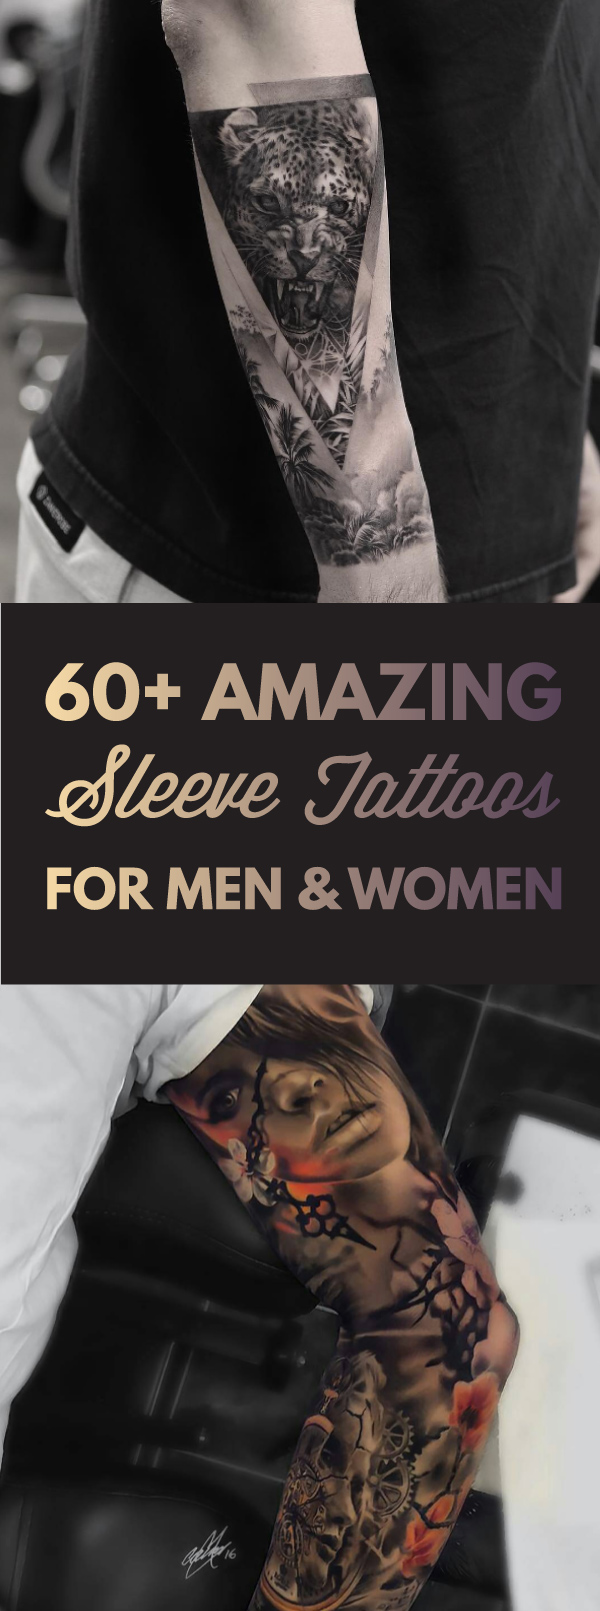 60+ Amazing Sleeve Tattoos for Men & Women